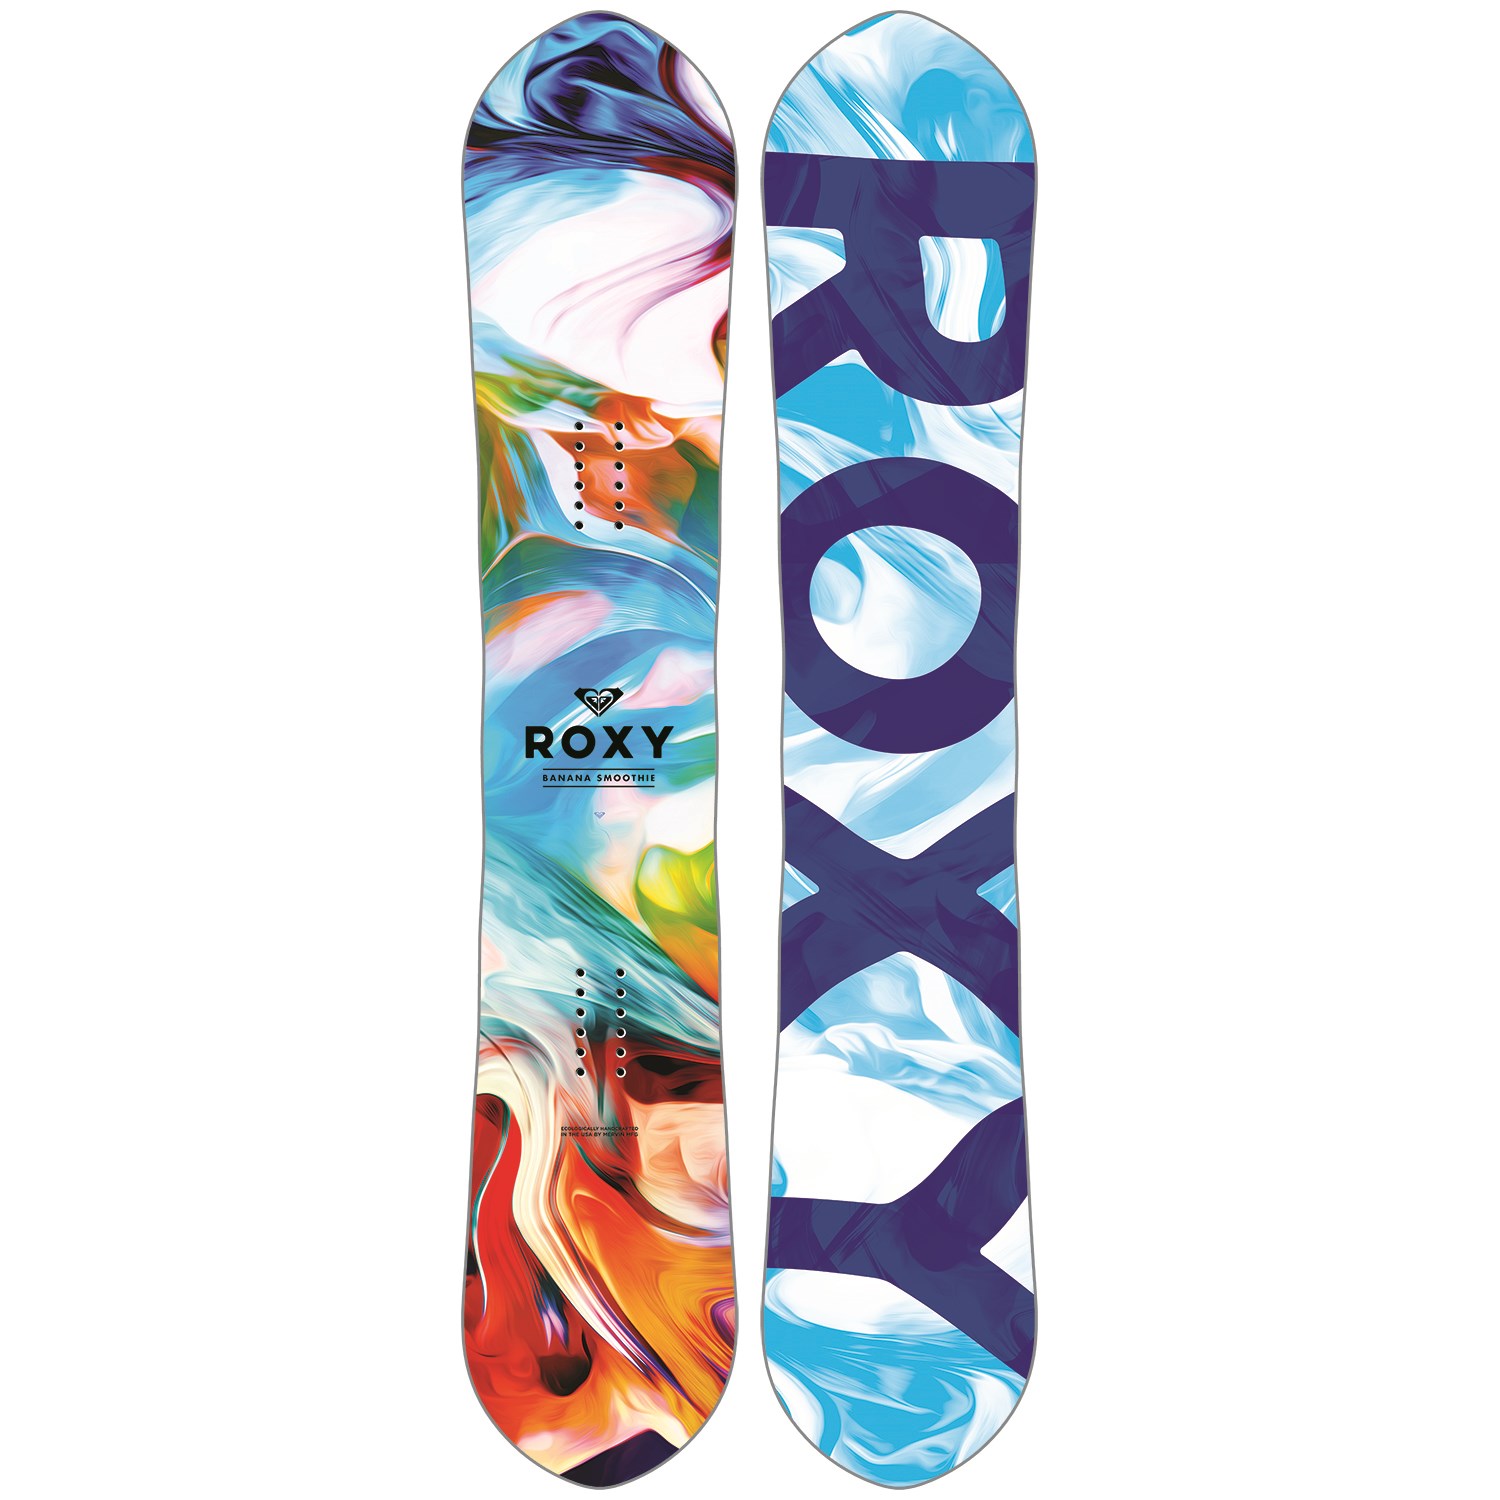 Roxy Smoothie Women's Snowboard